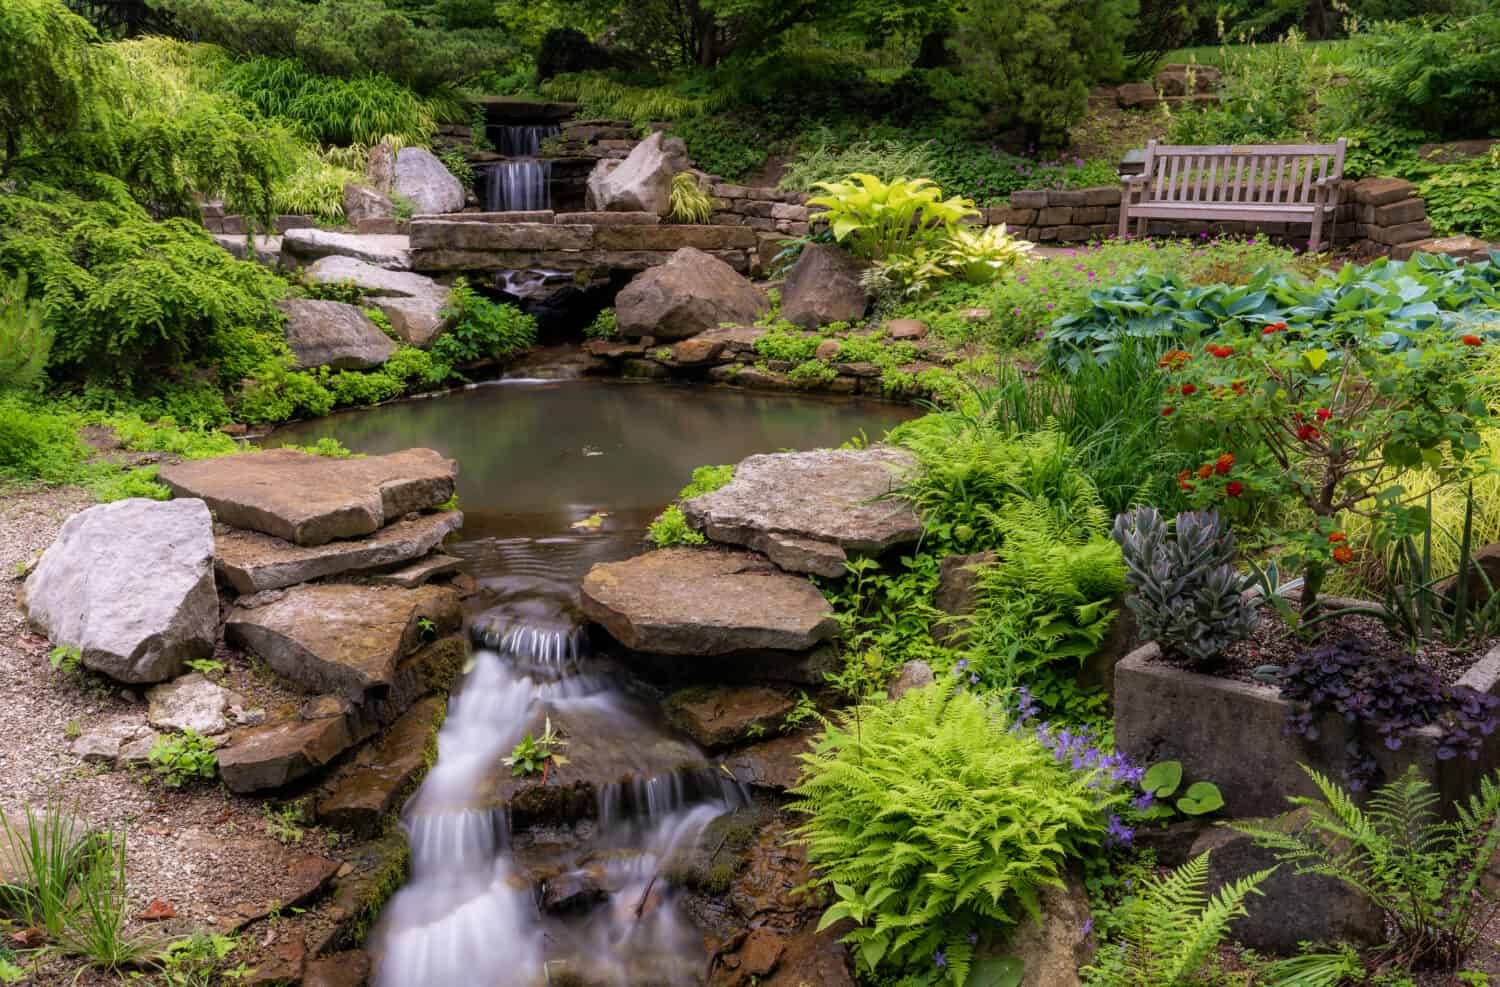 Peaceful Zen Garden Scene at Inniswood metro Park in Columbus Ohio.  